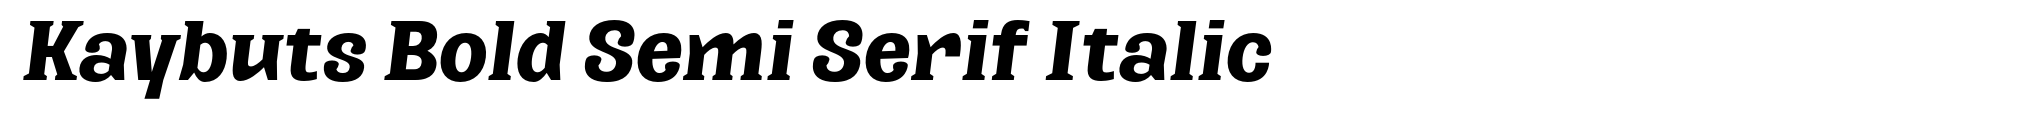 Kaybuts Bold Semi Serif Italic image